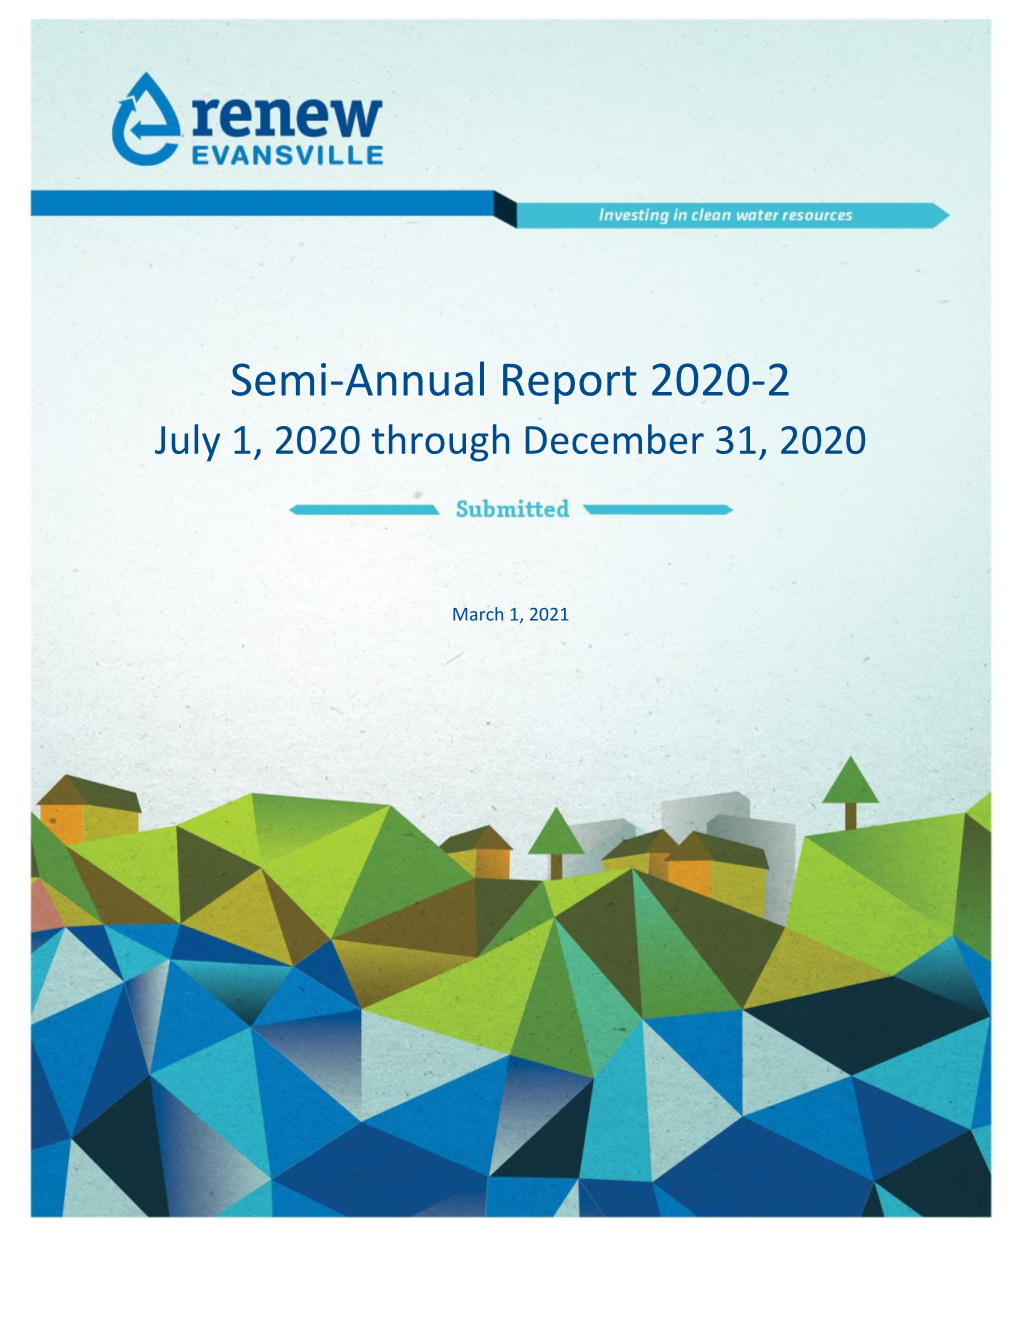 Semi-Annual Report 2020-2 July 1, 2020 Through December 31, 2020